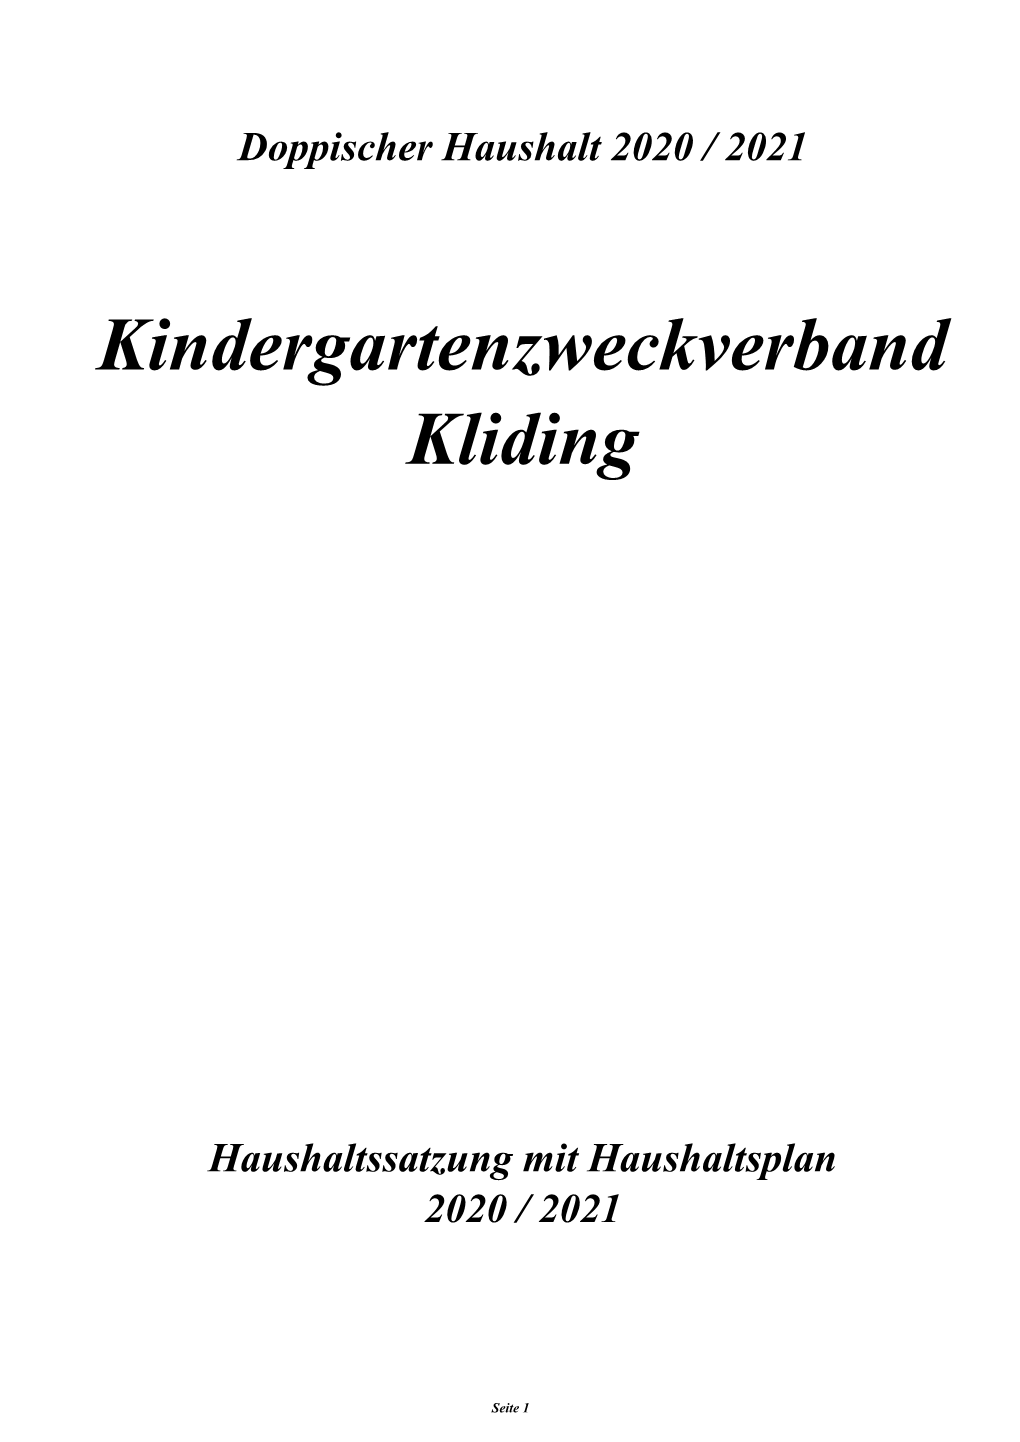 Kindergartenzweckverband Kliding